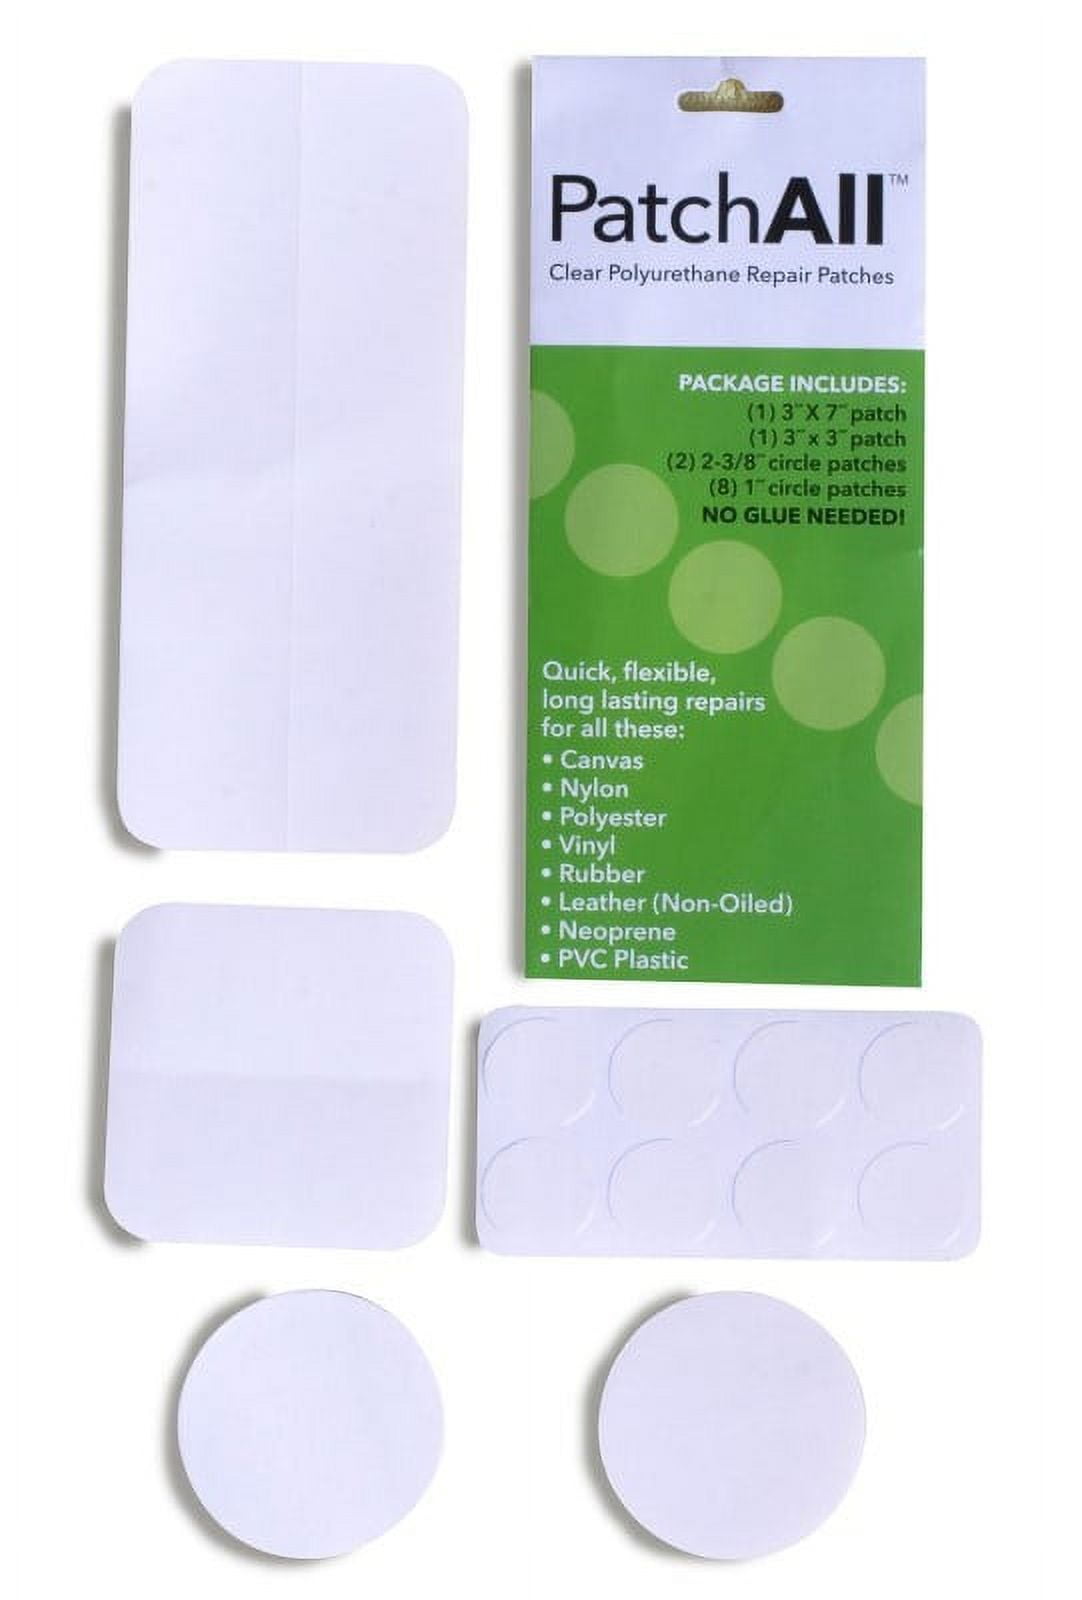 Loctite Vinyl Fabric & Plastic Repair Flexible Adhesive, Pack of 1, Clear 1  oz Tube